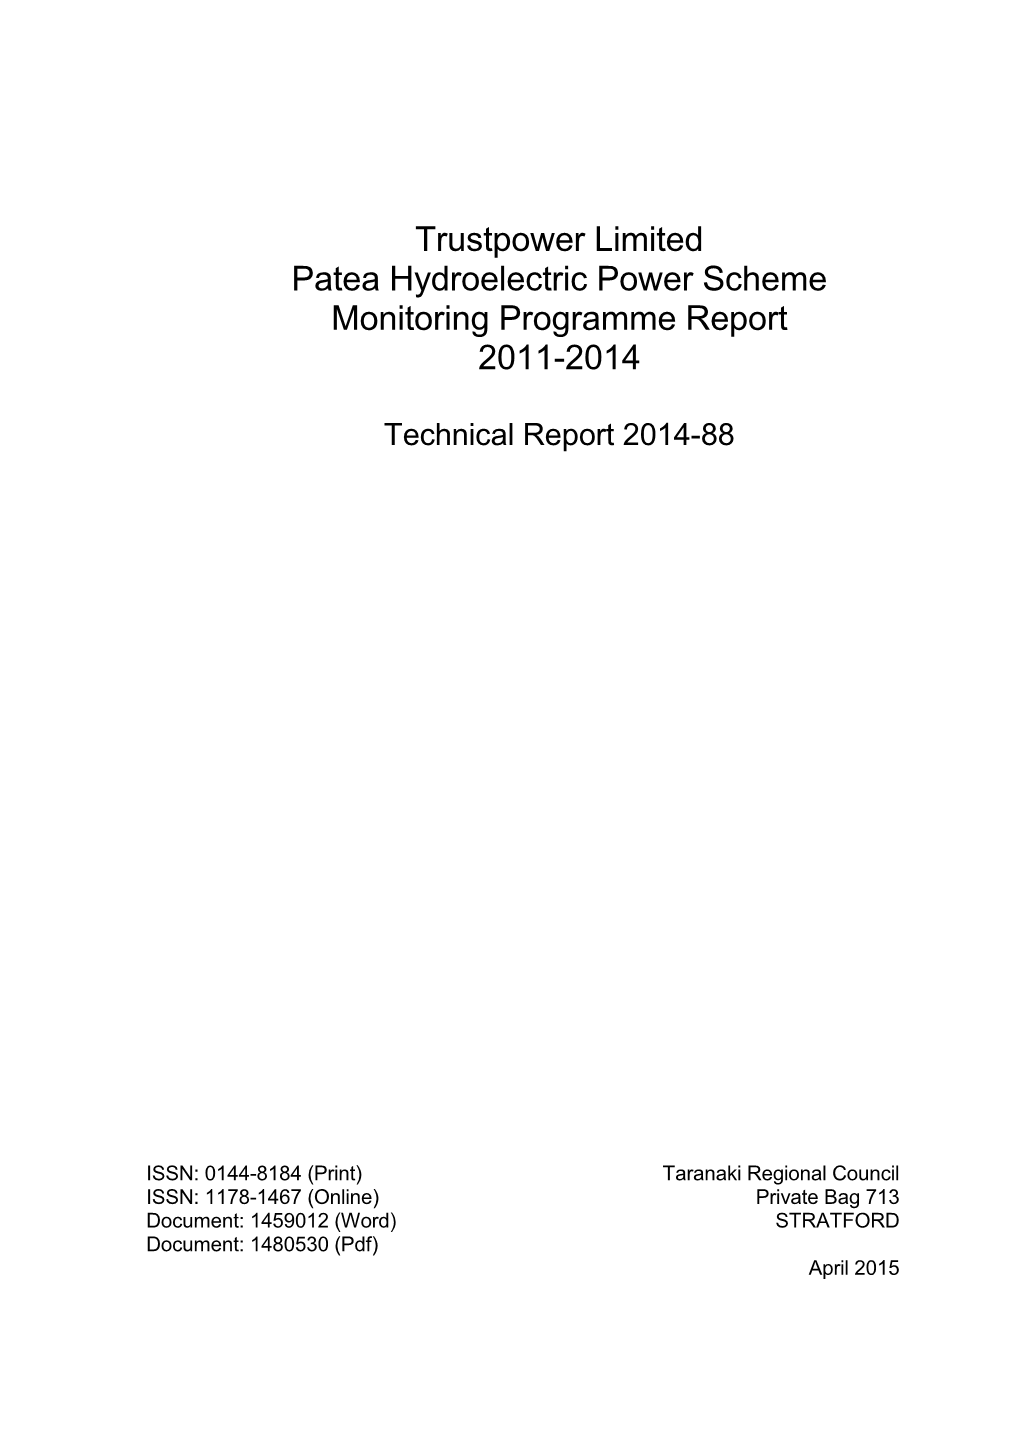 Trustpower Ltd Patea Hydro Scheme Monitoring Report